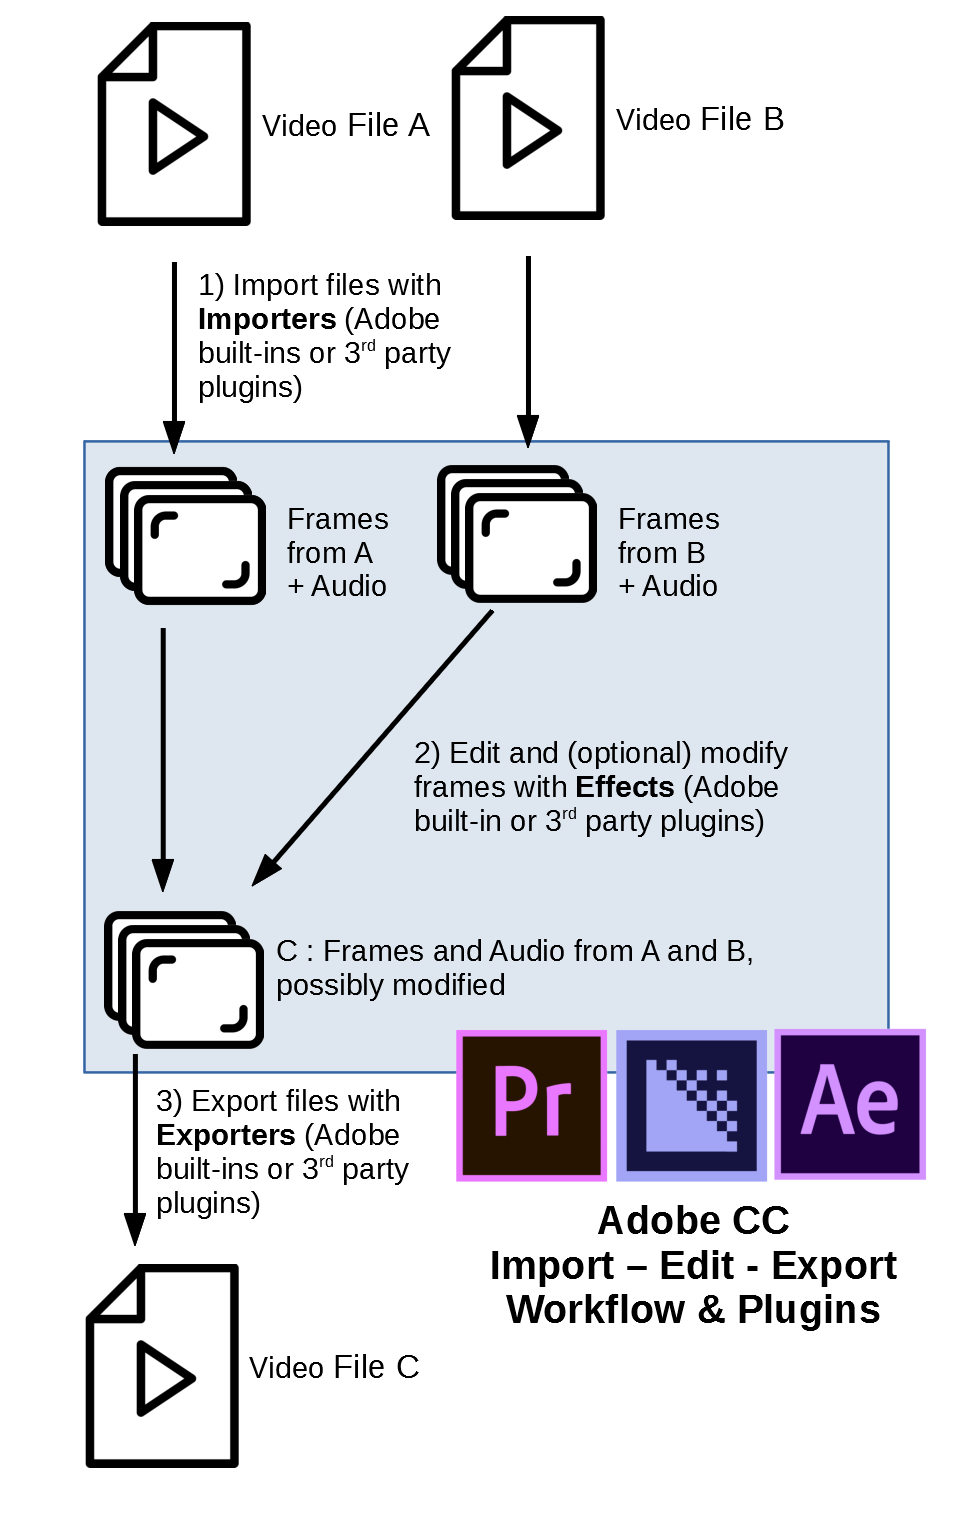 Adobe Workflow Plugins